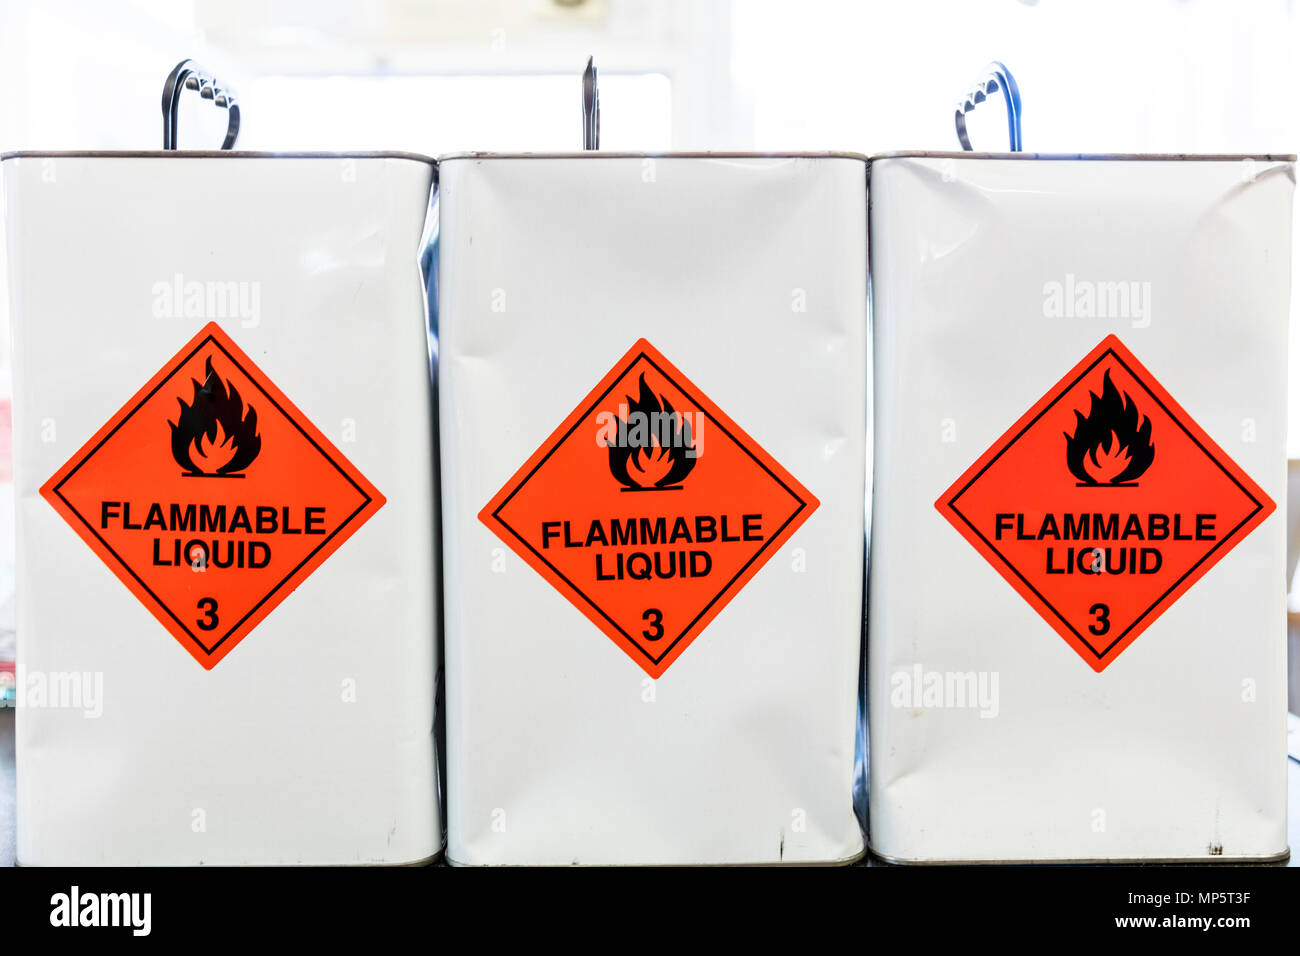 Flammable liquid, Flammable liquid warning sign, Flammable liquid sign,  combustible liquid, combustible liquid warning sign, Flammable liquid warning Stock Photo